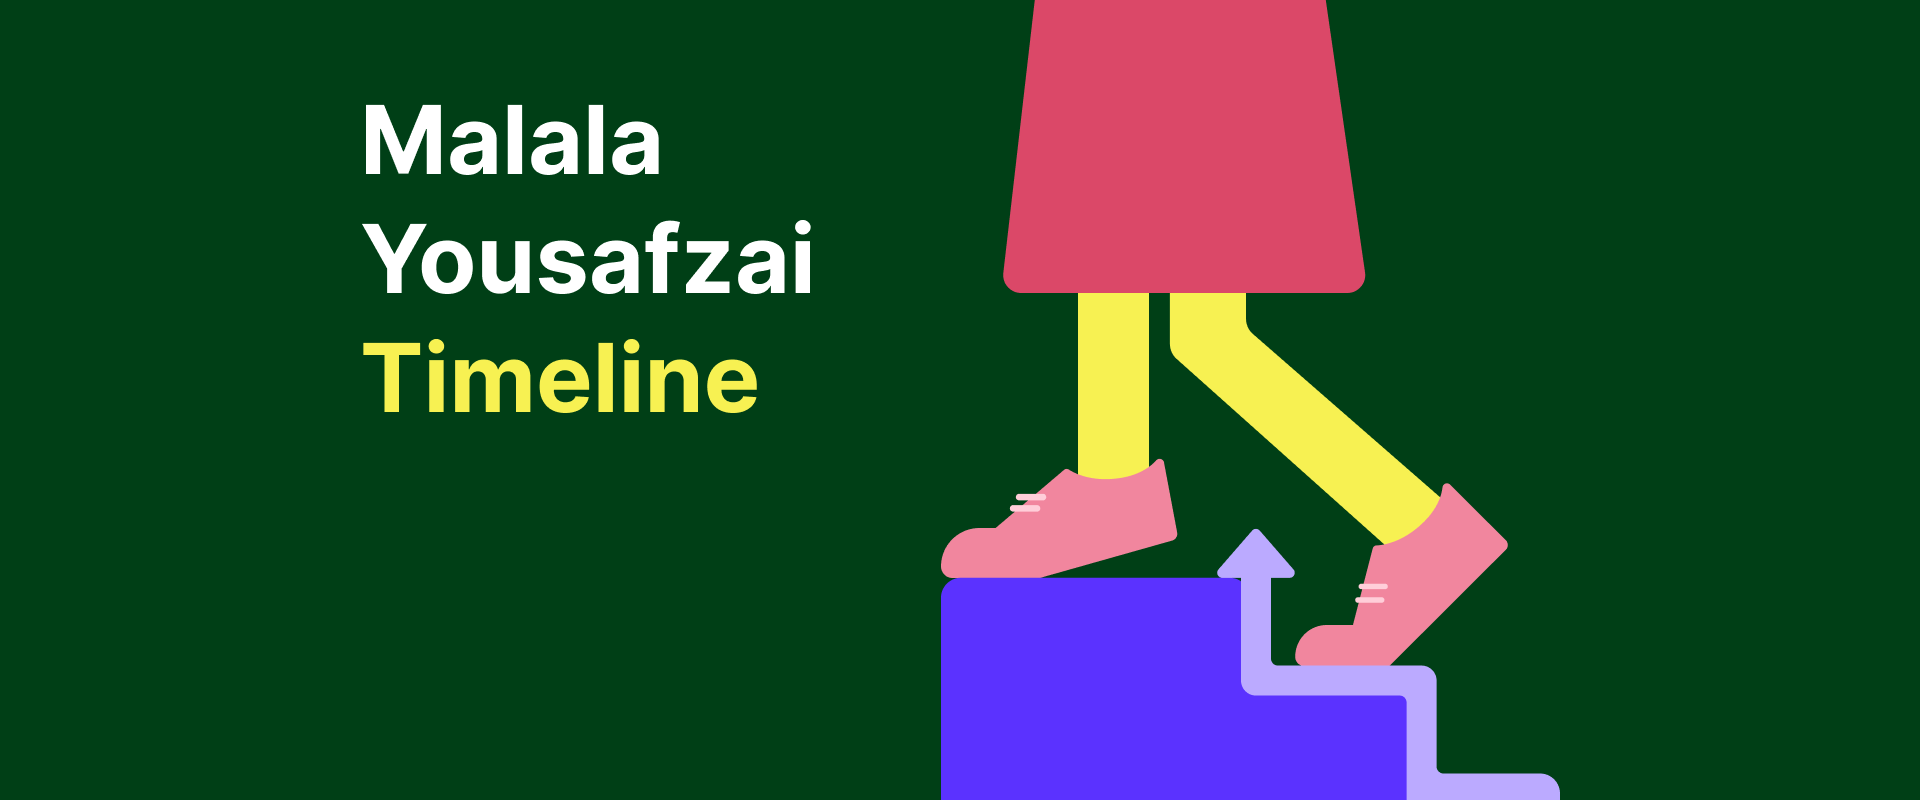 Malala Yousafzai Timeline